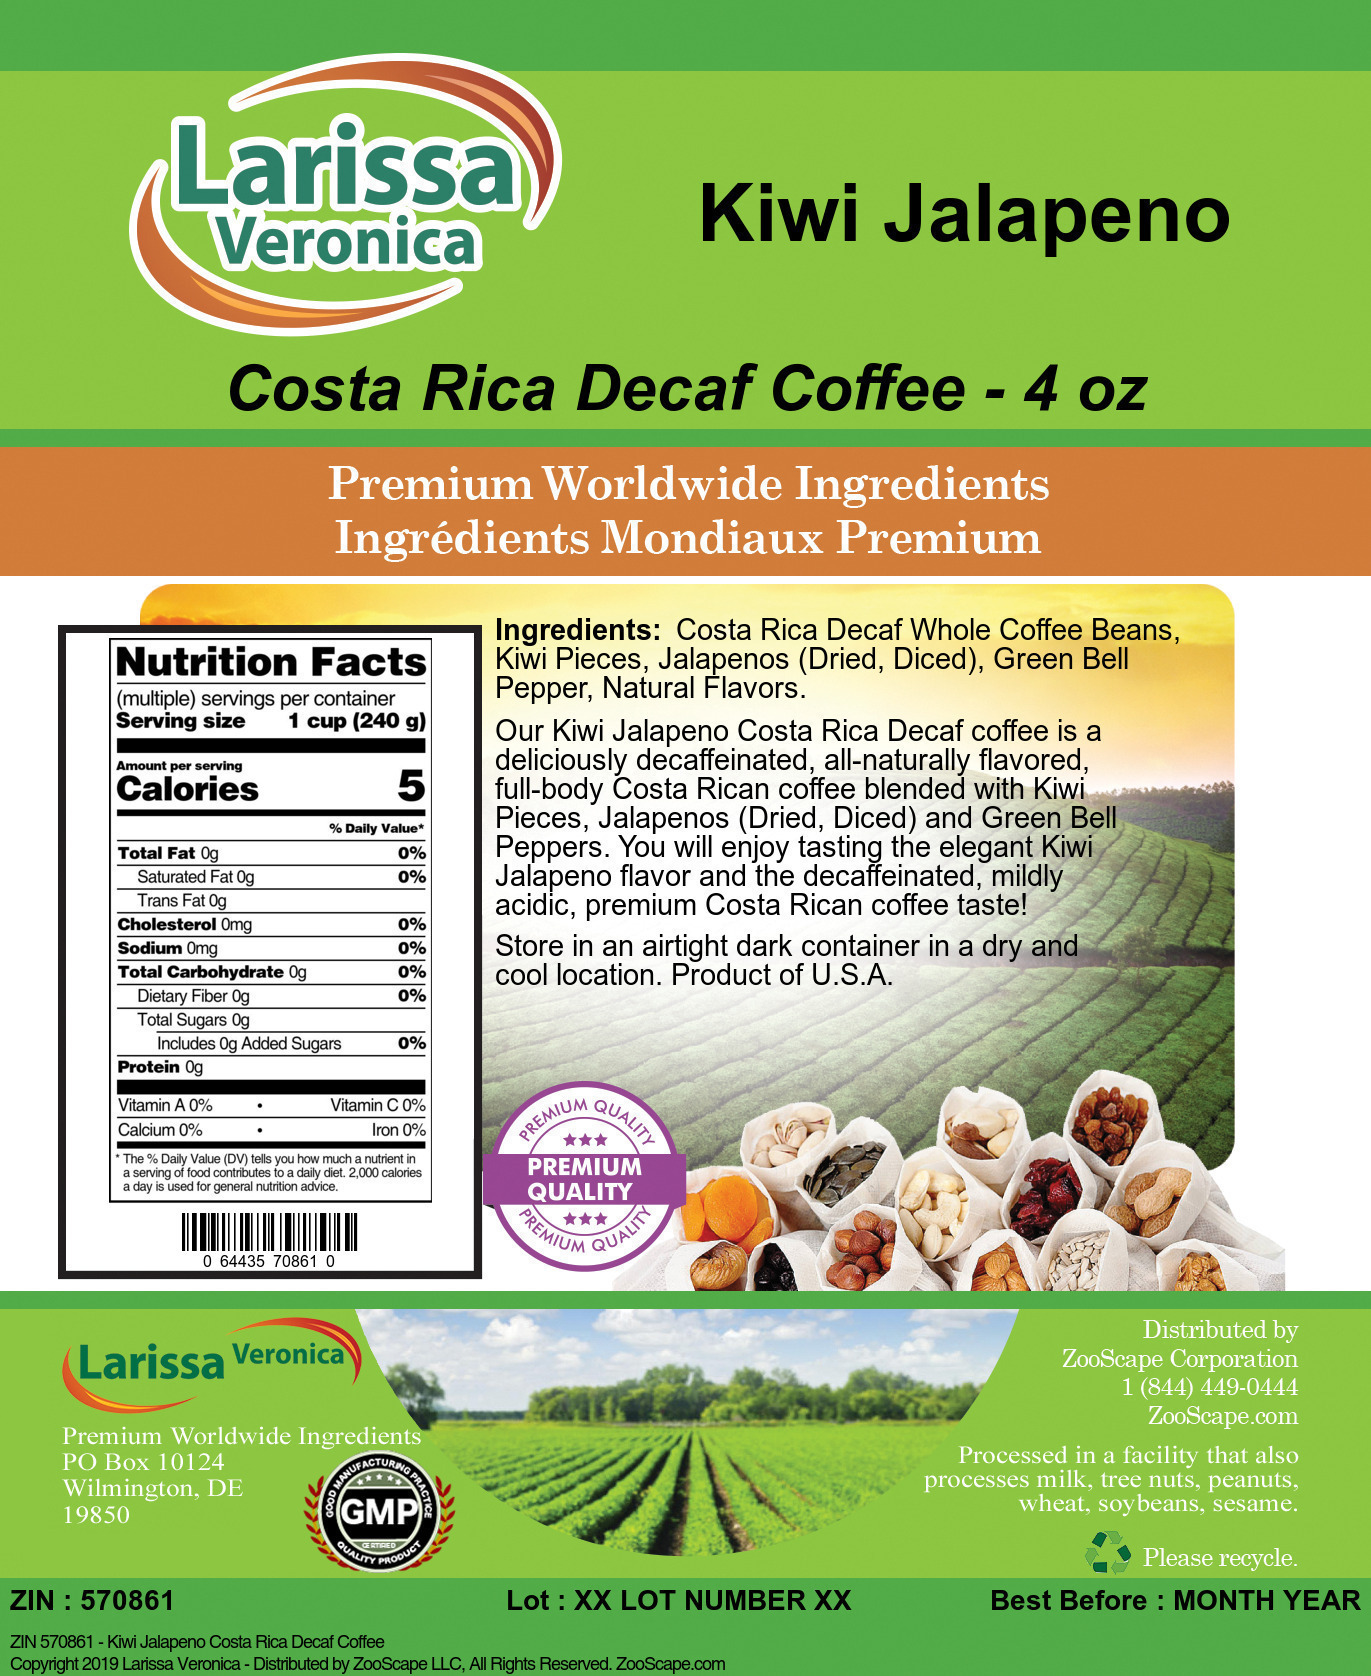 Kiwi Jalapeno Costa Rica Decaf Coffee - Label